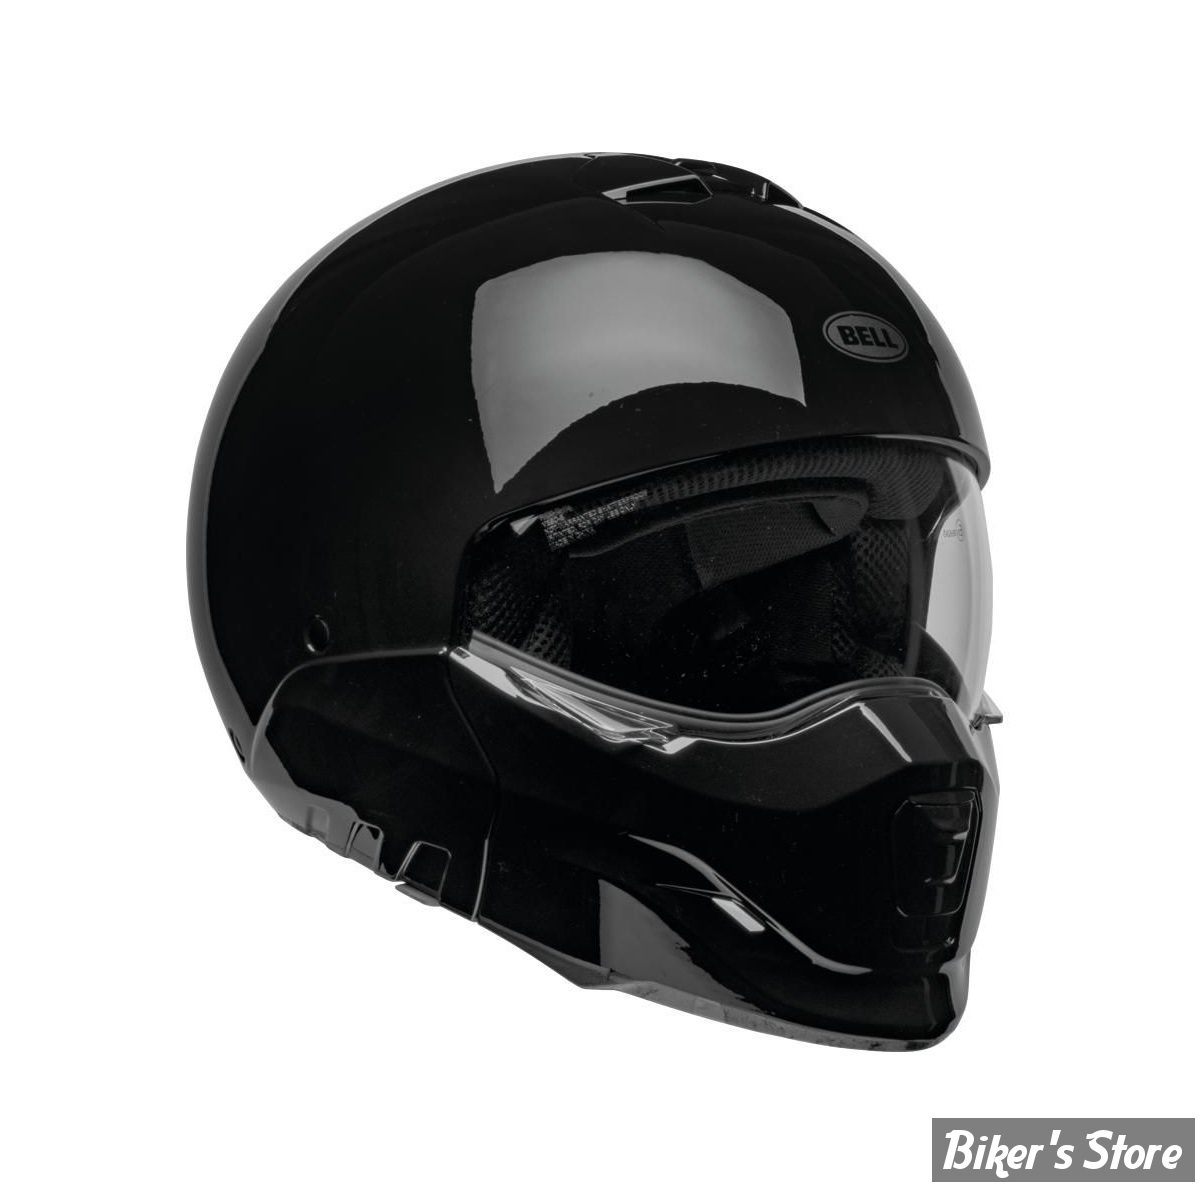 - CASQUE BELL - Broozer Modular Helmet - CONVERTIBLE - COULEUR : NOIR BRILLANT - TAILLE : XXL